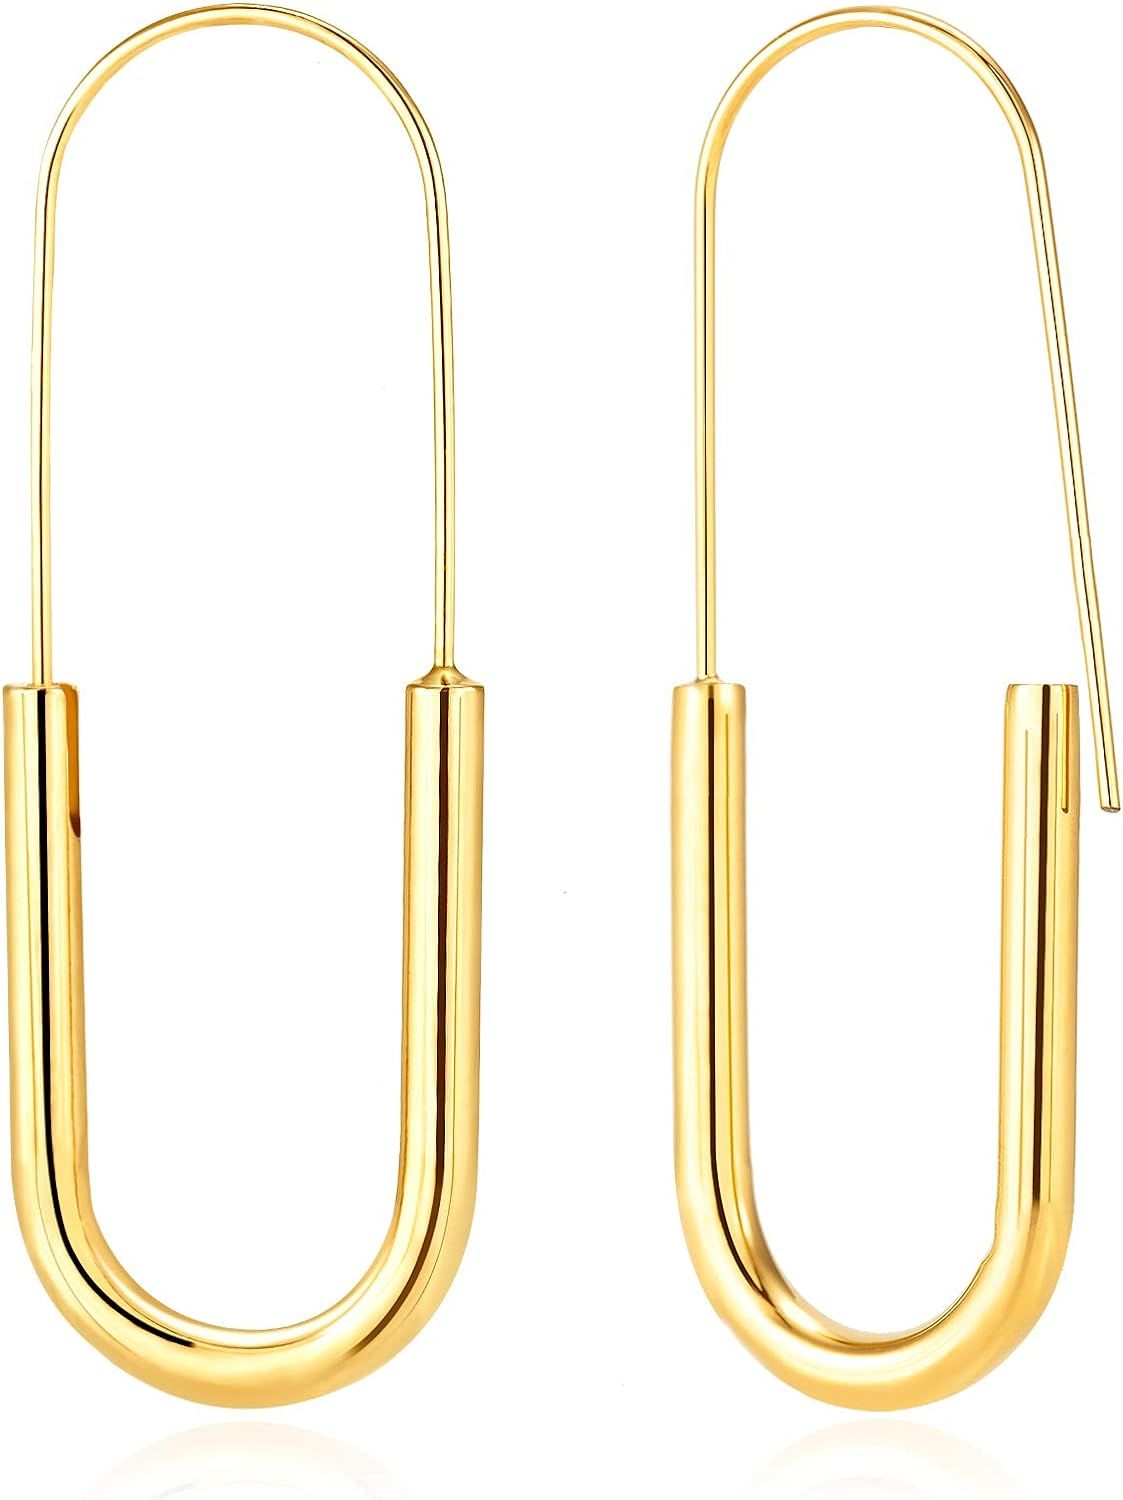 Pin Earrings Hoop: Minimalist Hypoallergenic Gold Plated Fashion Trendy Jewelry for Women Girls Teen | Amazon (US)